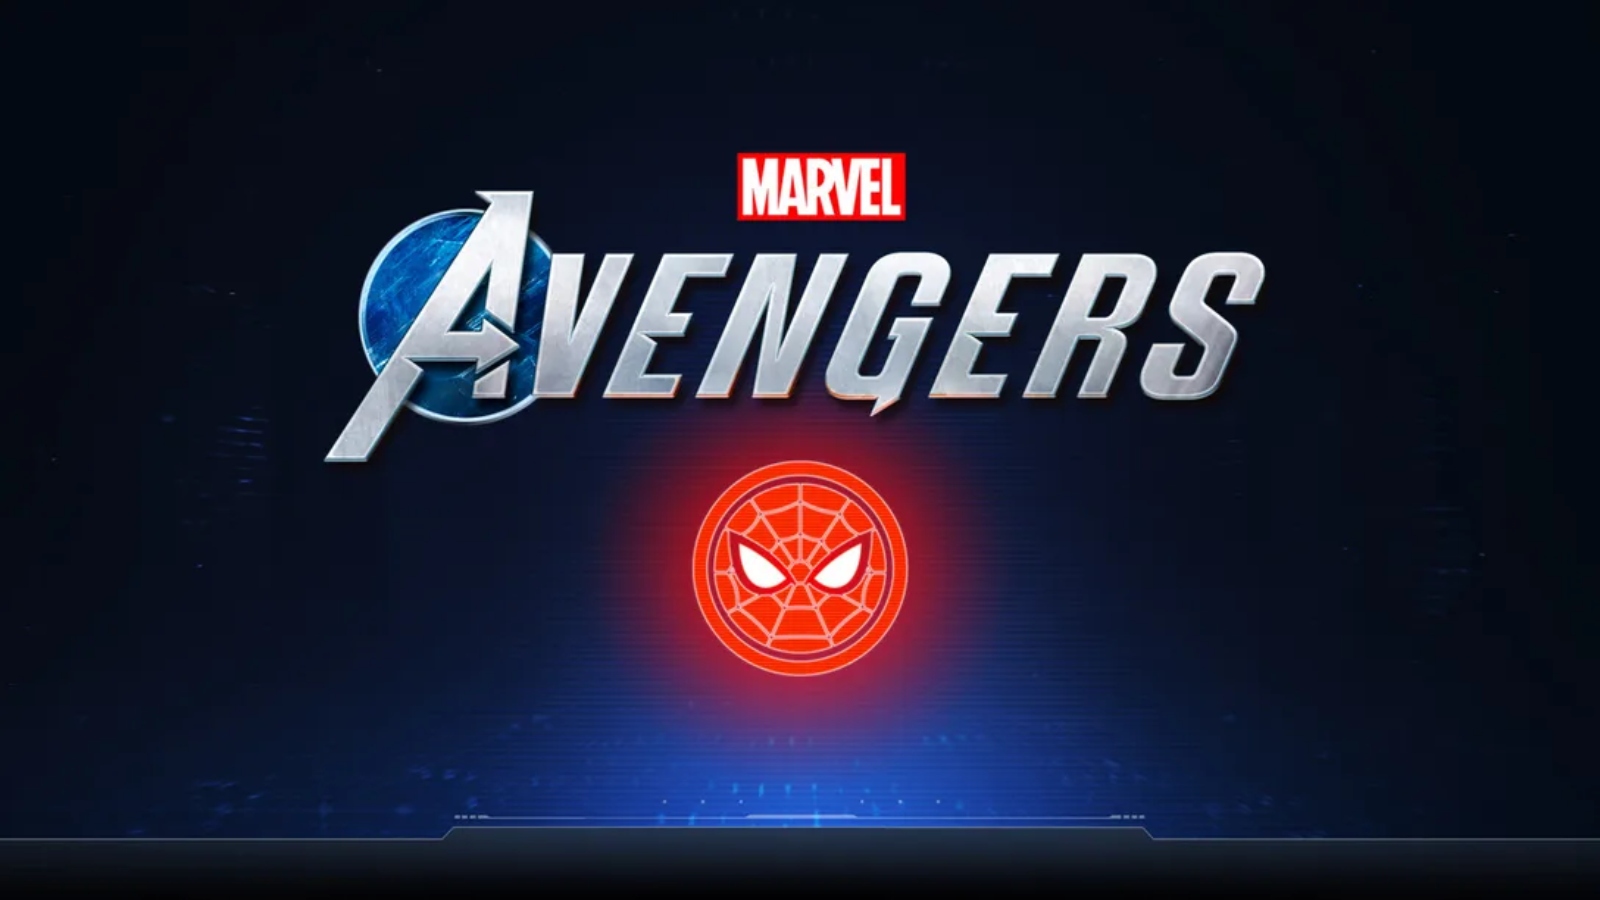 Spider-Man Marvel's Avengers Official Image